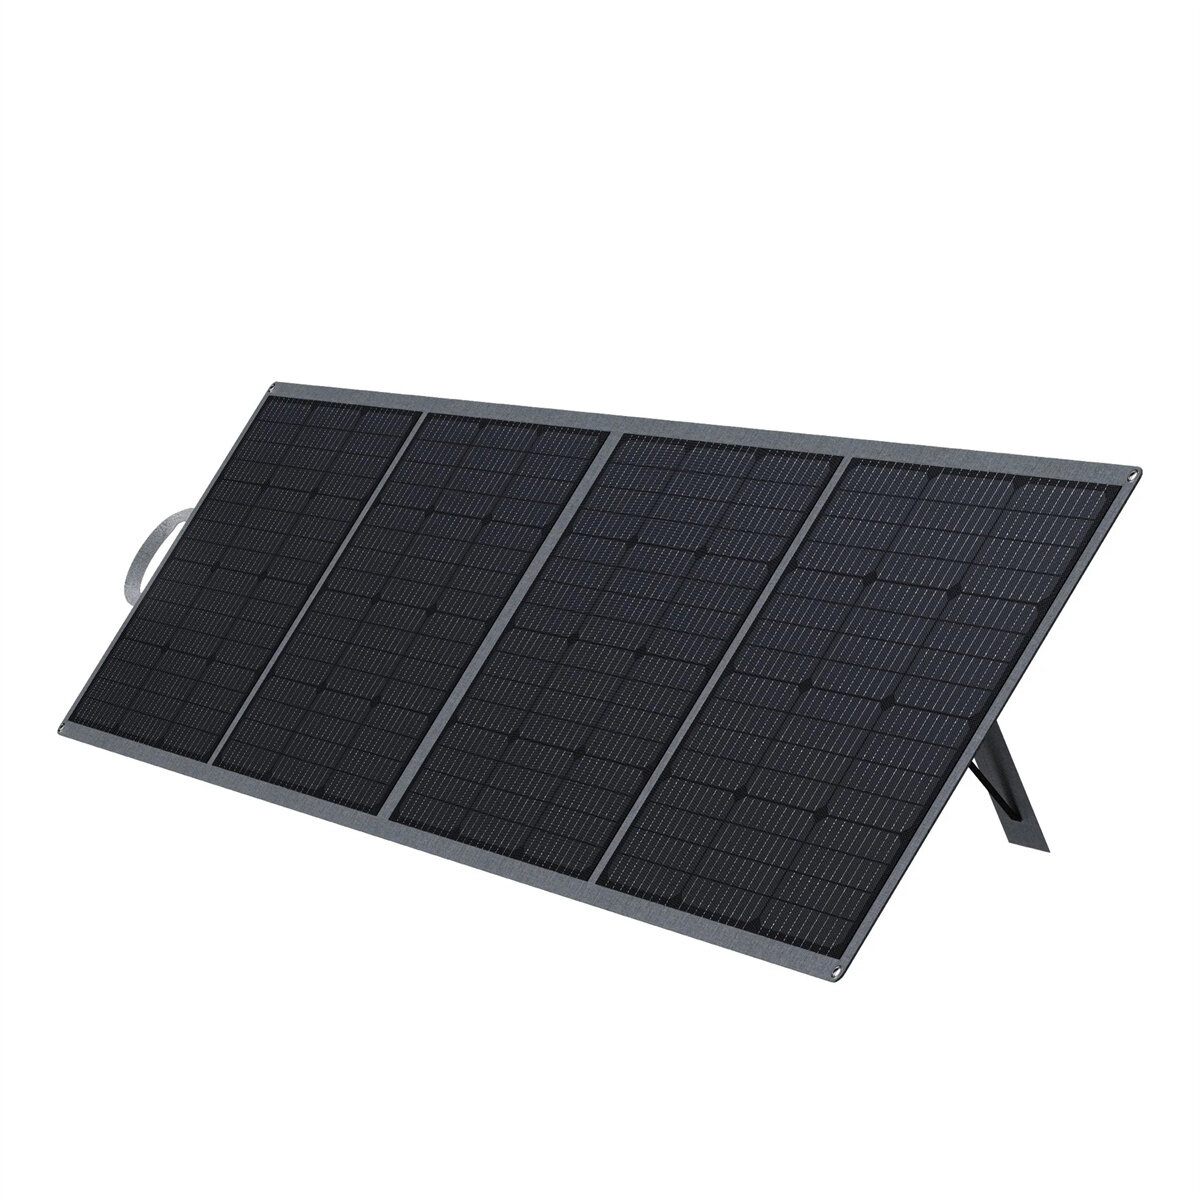 [EU Direct] DaranEner SP300 Panel Solar ETFE 300W para Generador Solar NEO2000 Paneles Solares 5V USB＆36.3V CC 22.0% Eficiencia Panel Solar Portátil Plegable para Patio, RV, Camping al Aire Libre, Cortes de Energía, Emergencias